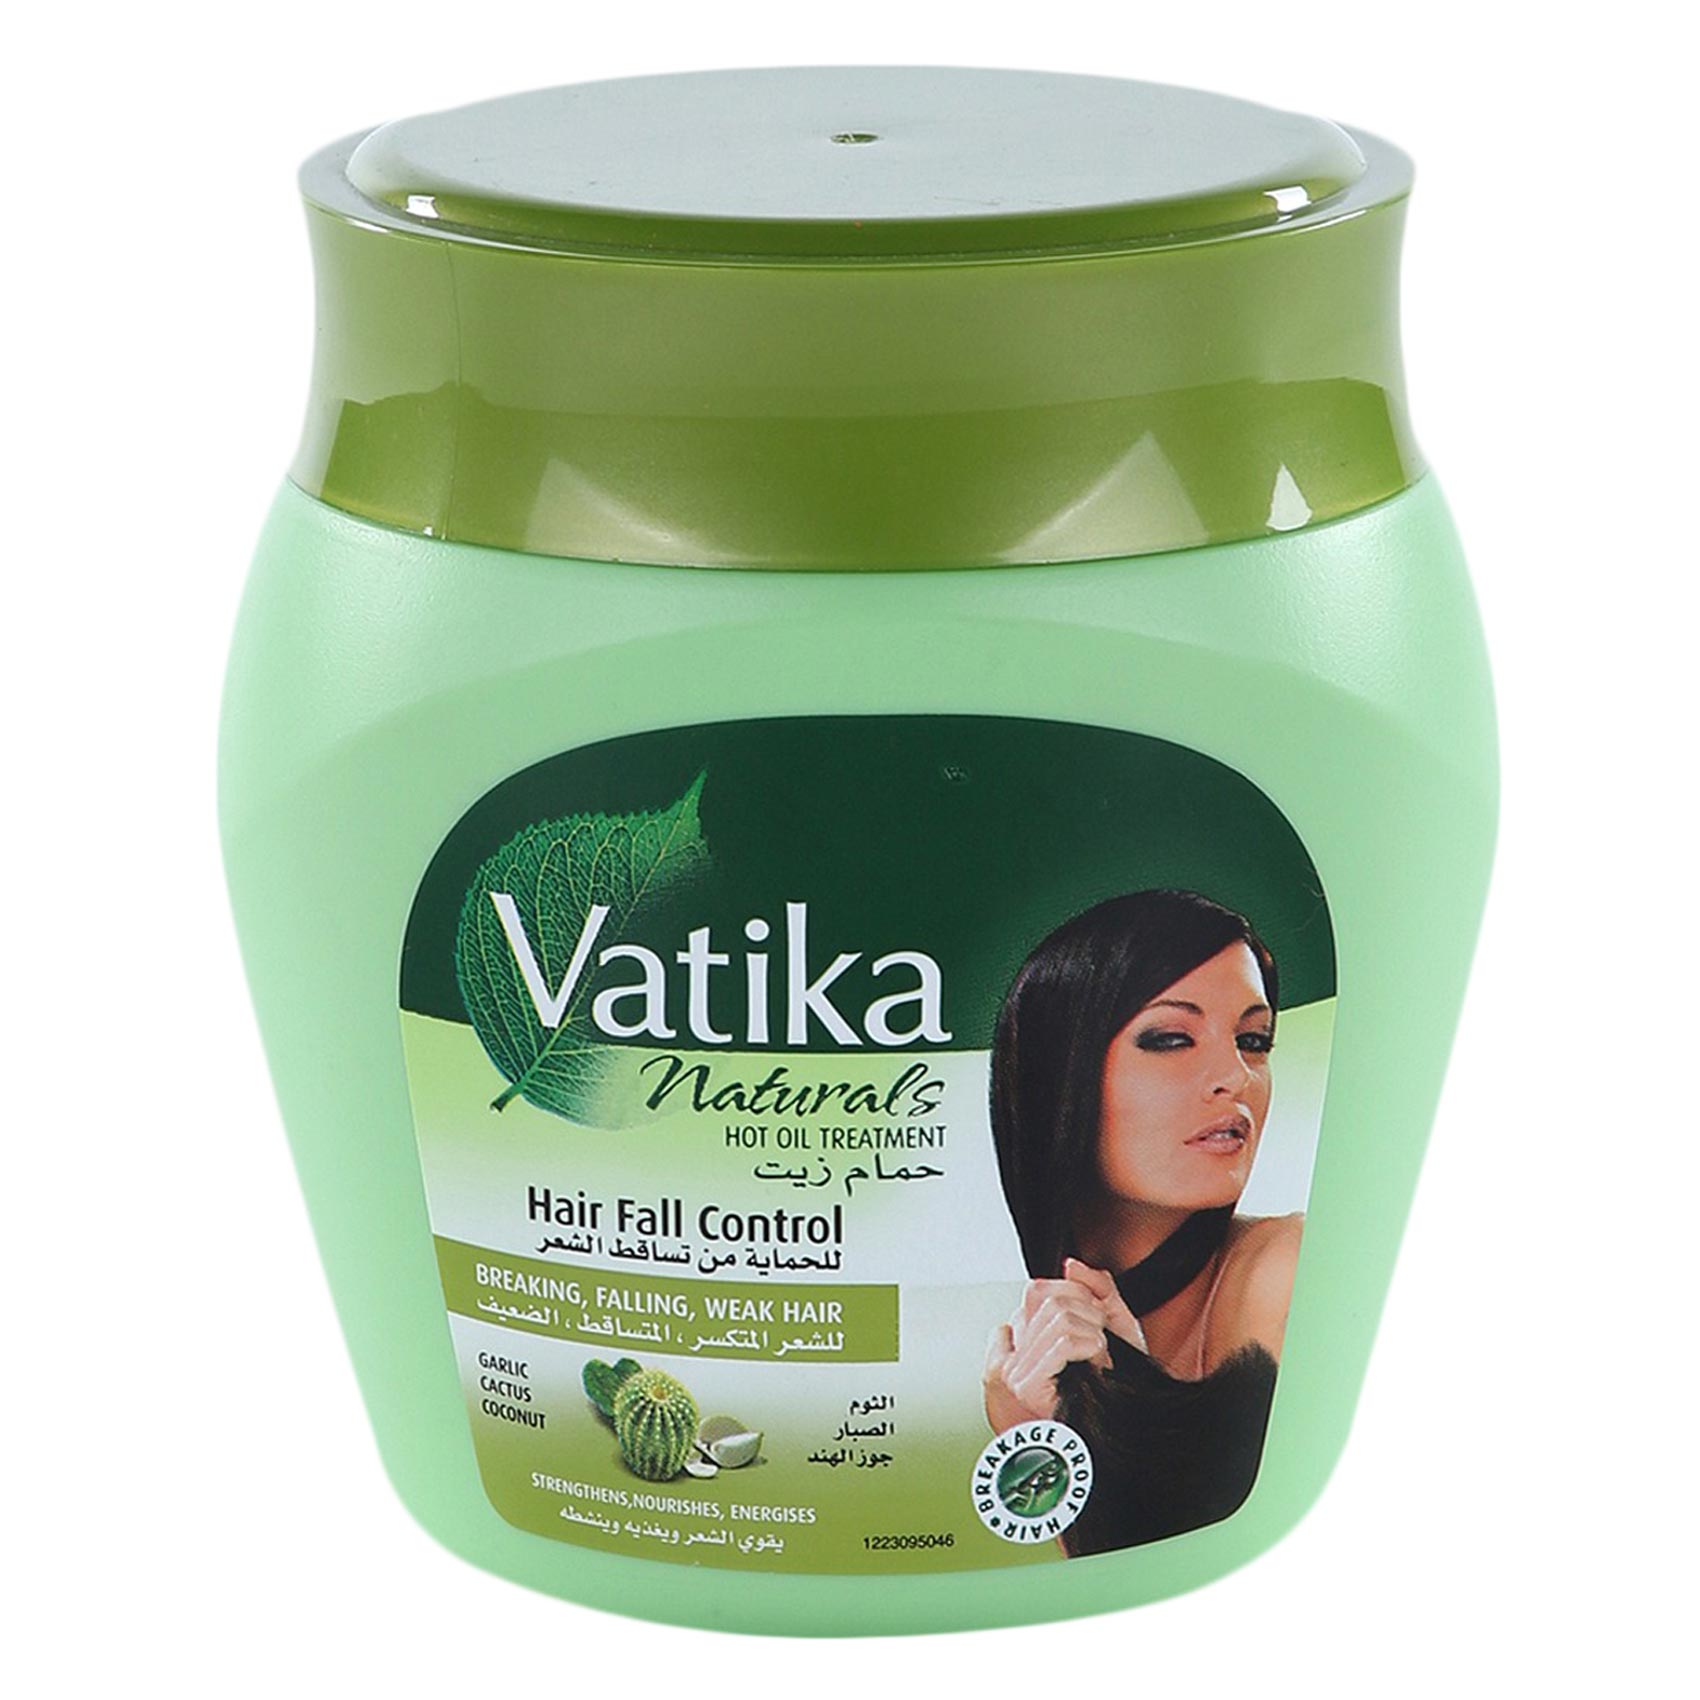 Vatika Natural Garlic Cactus And Coconut Hair Fall Control Hot Oil Treatment 500ML